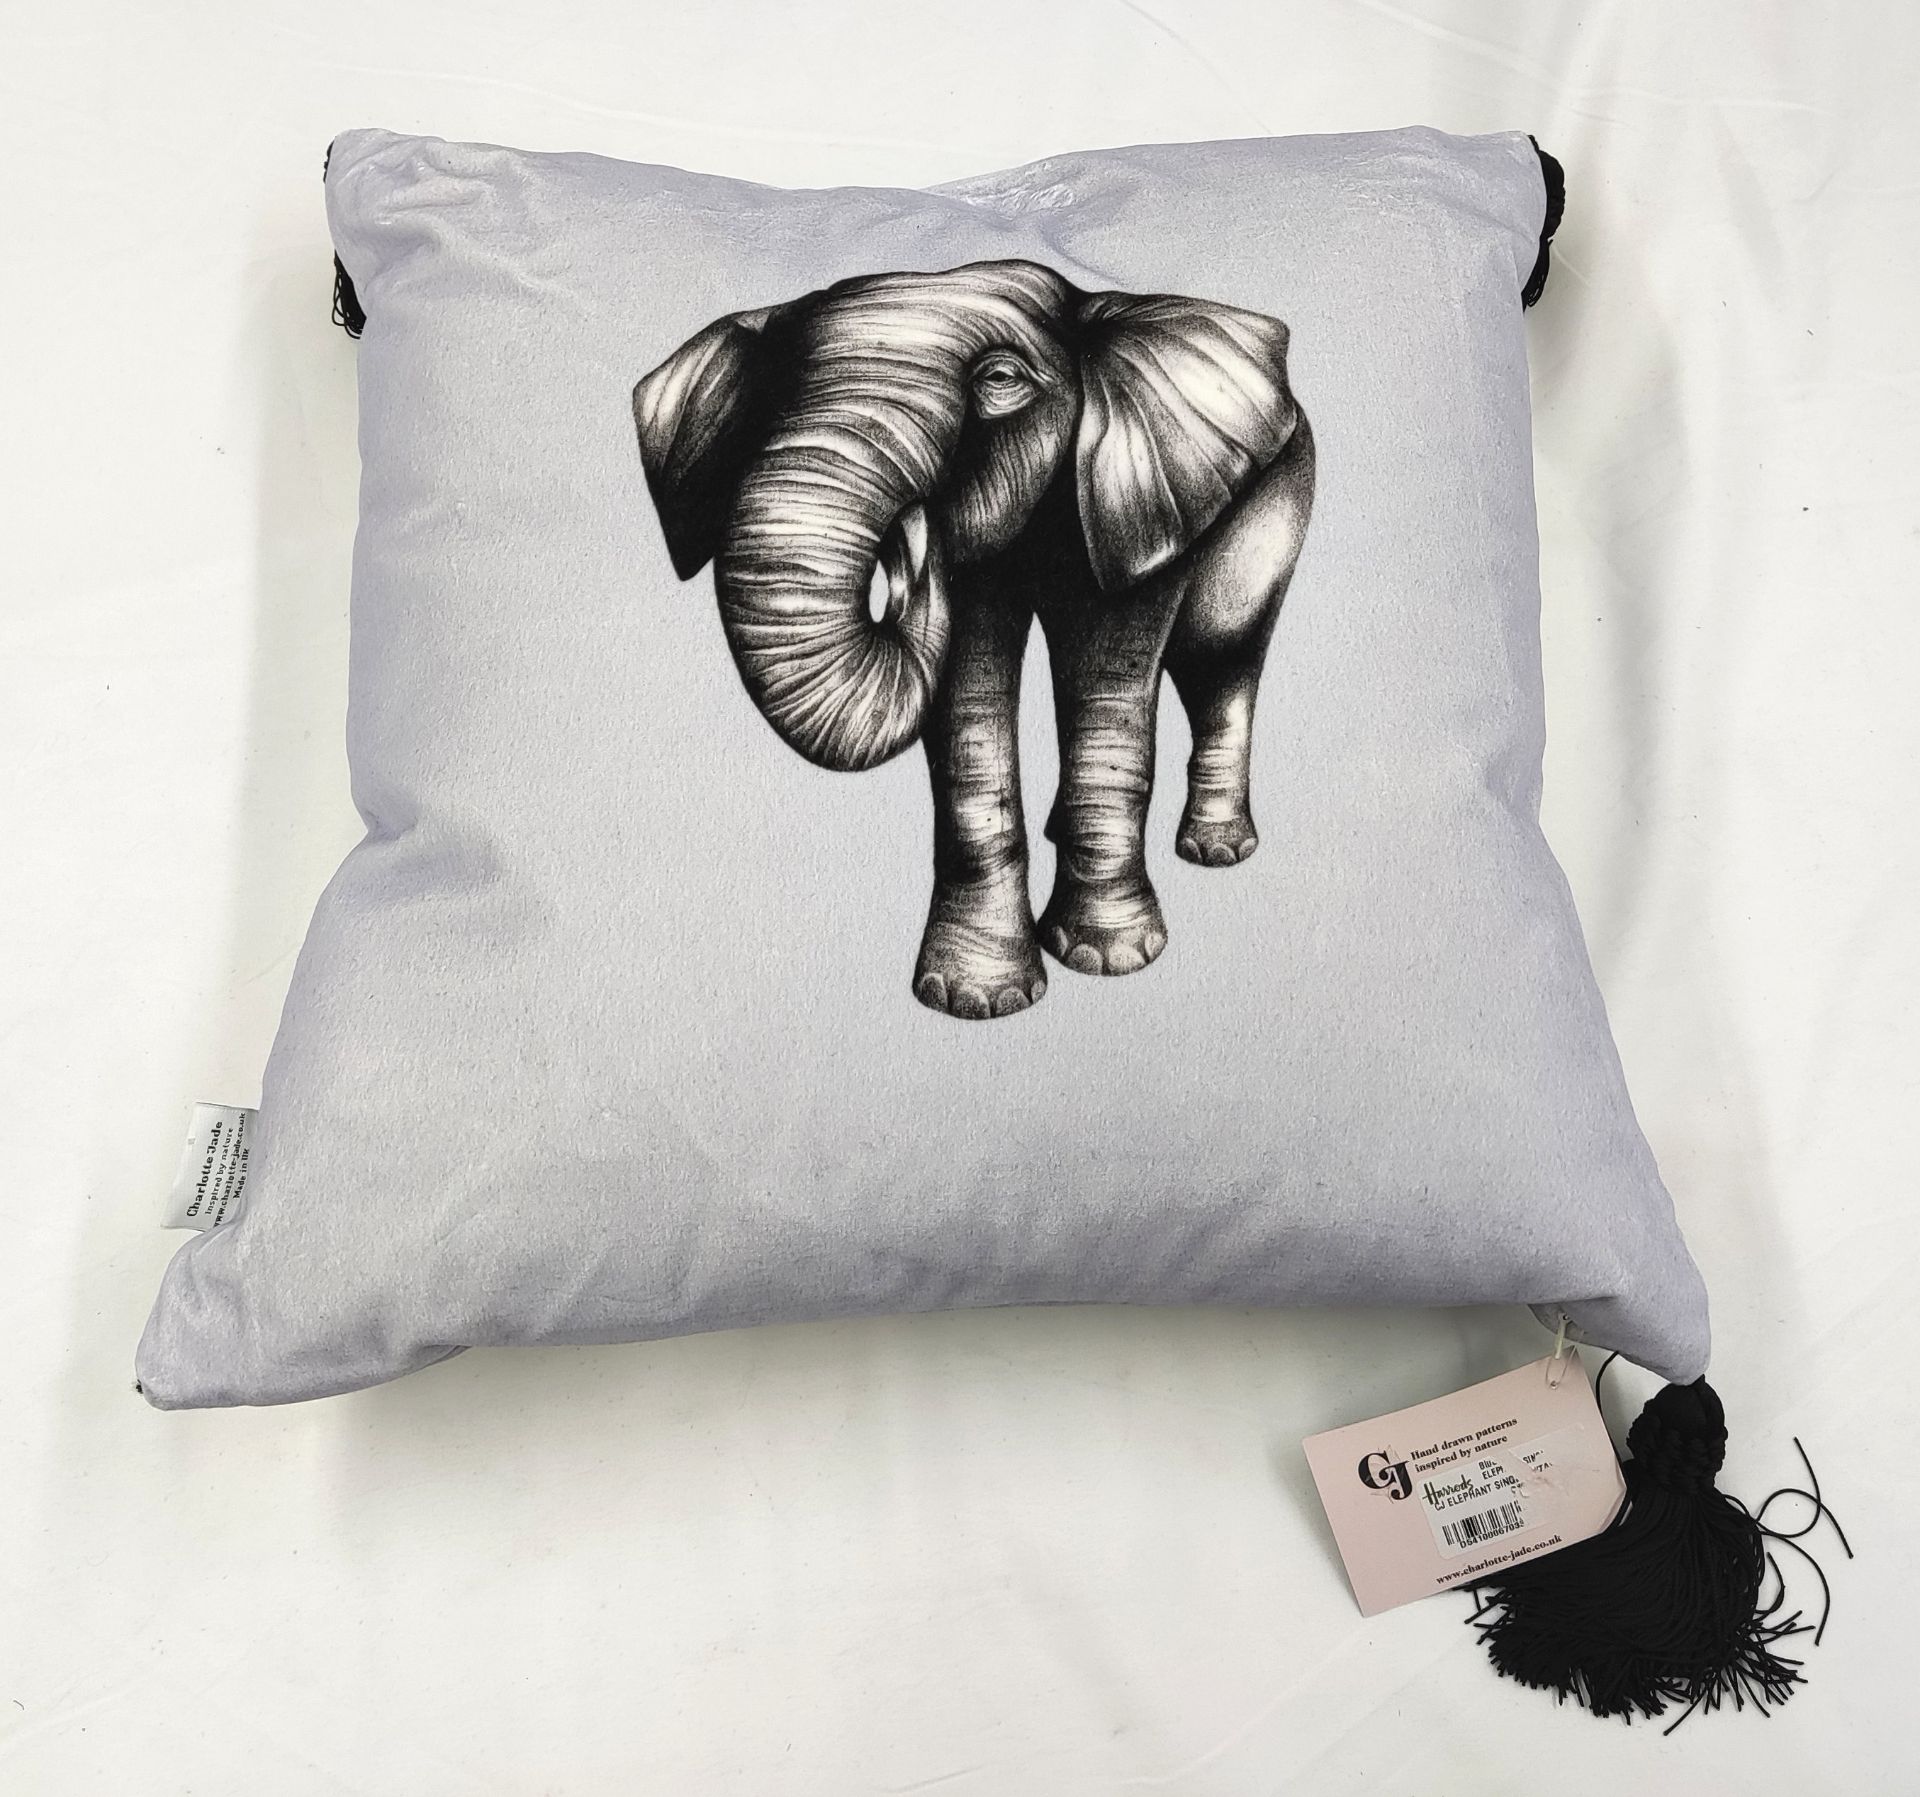 1 x CHARLOTTE JADE Velvet Elephant Cushion - Original RRP £170.00 - Image 5 of 15